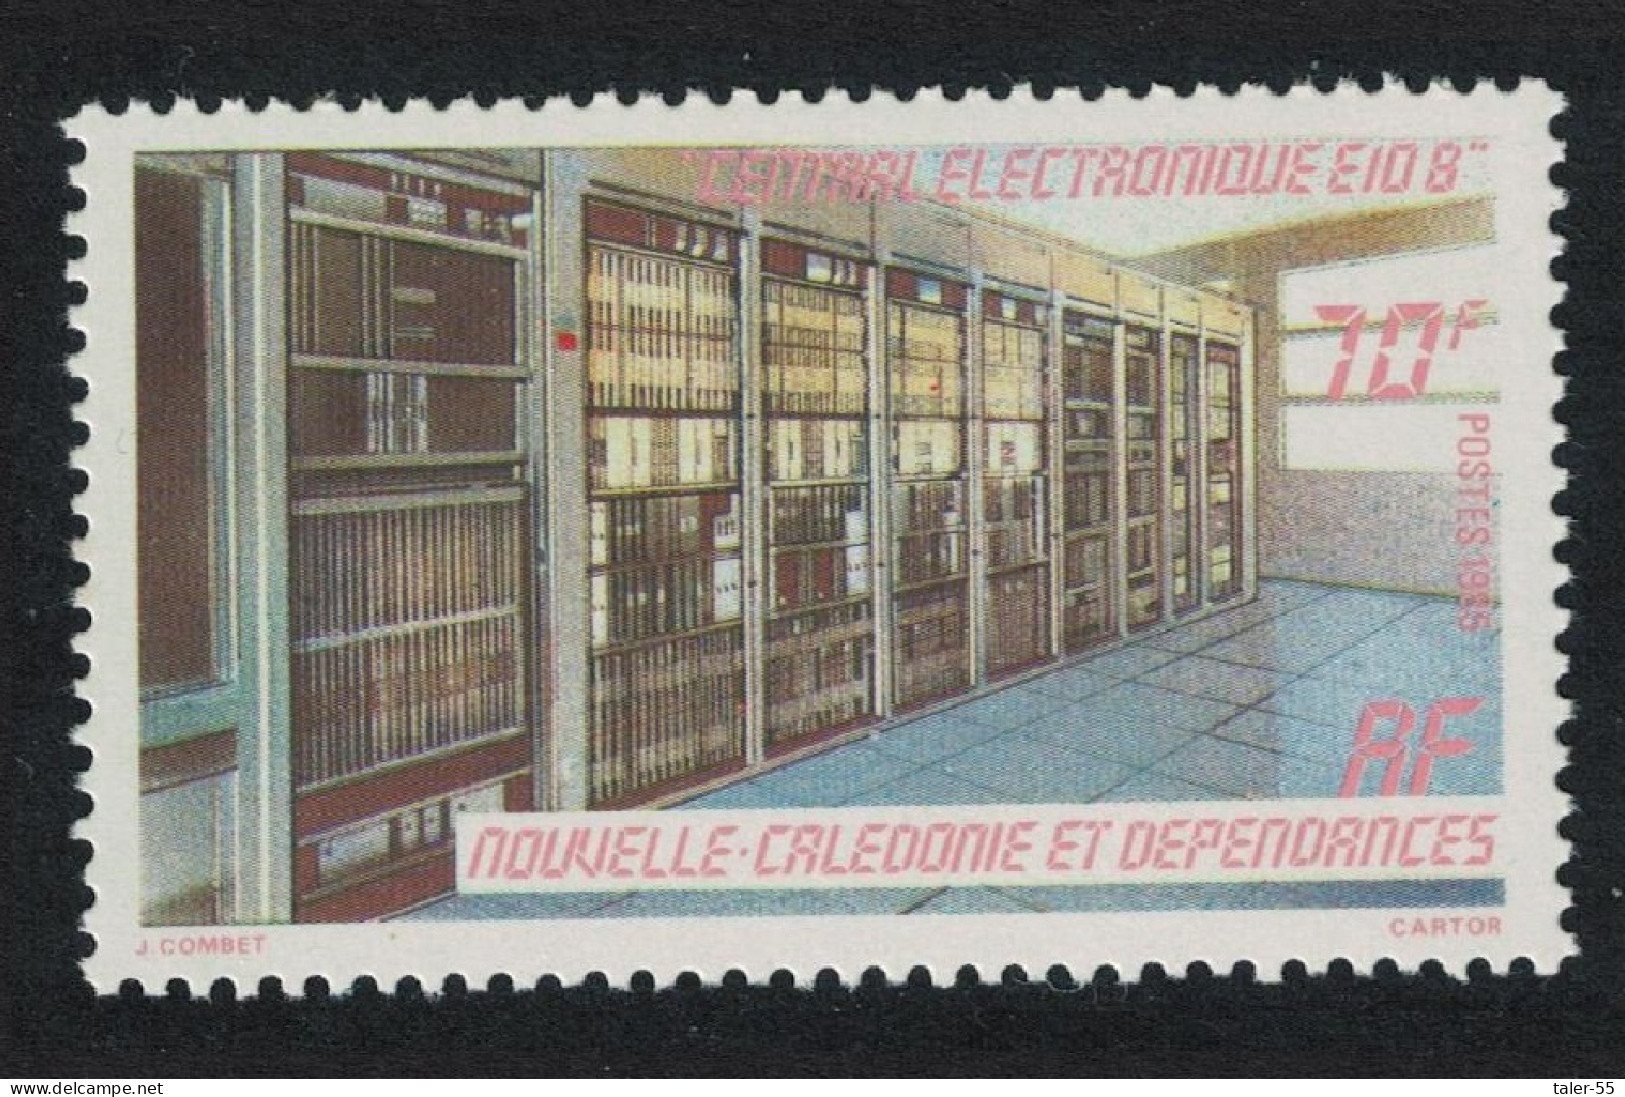 New Caledonia Inauguration Of Electronic Telephone Equipment 1985 MNH SG#765 - Neufs